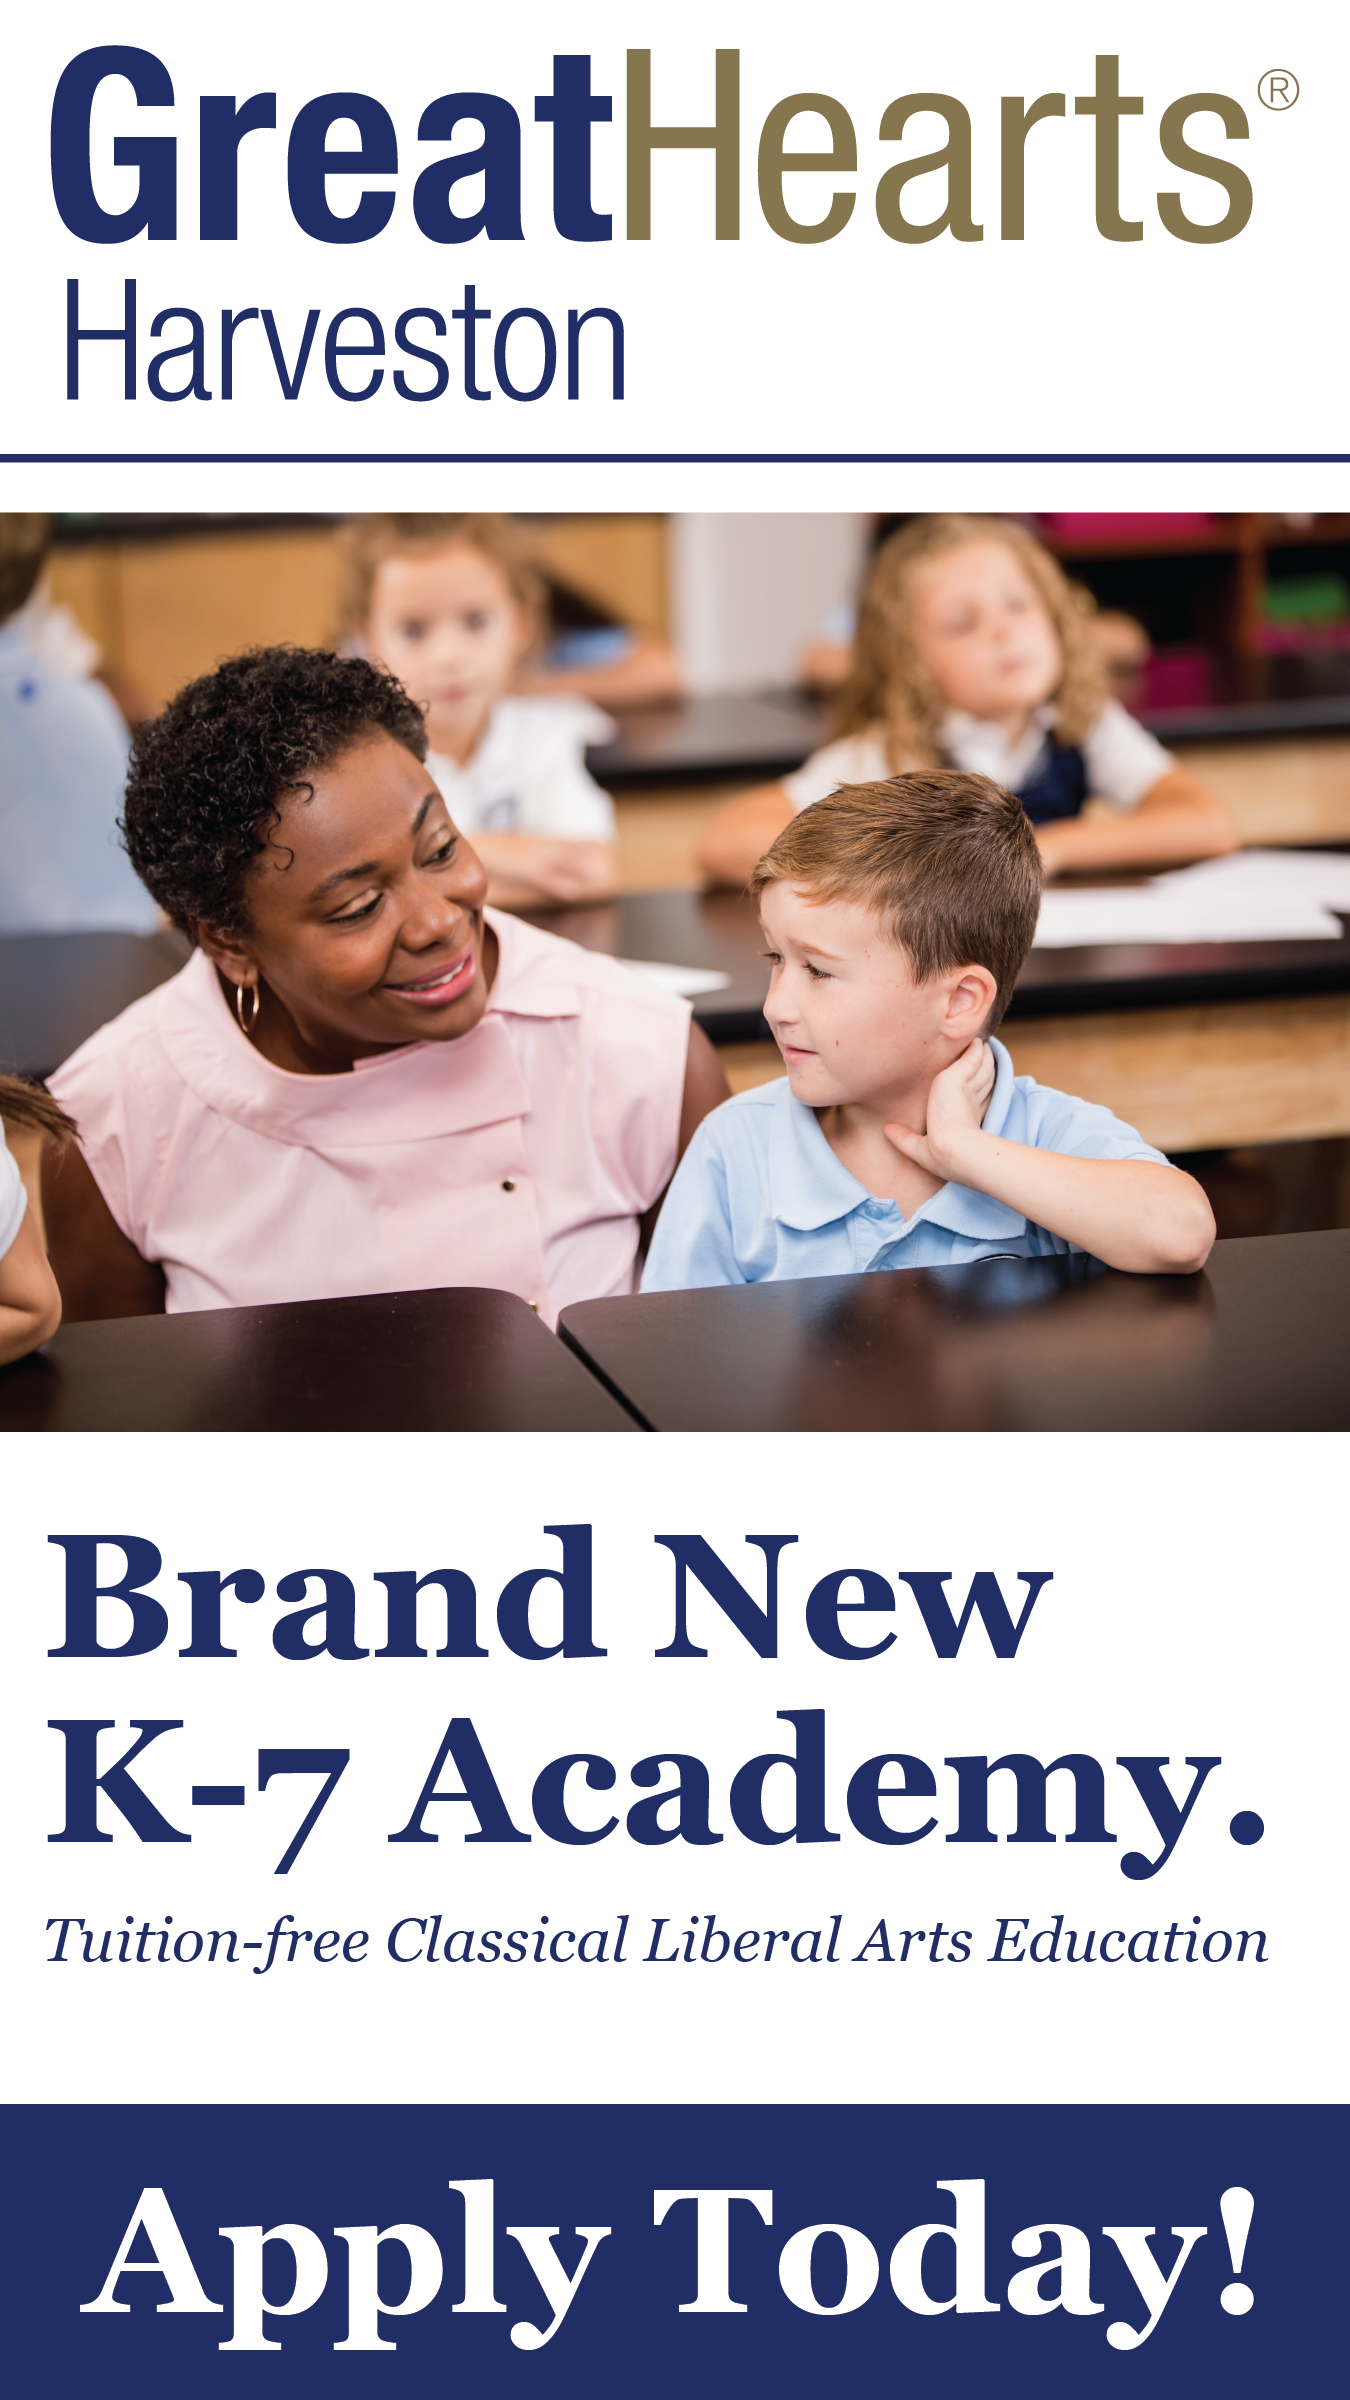 brand new academy - apply today